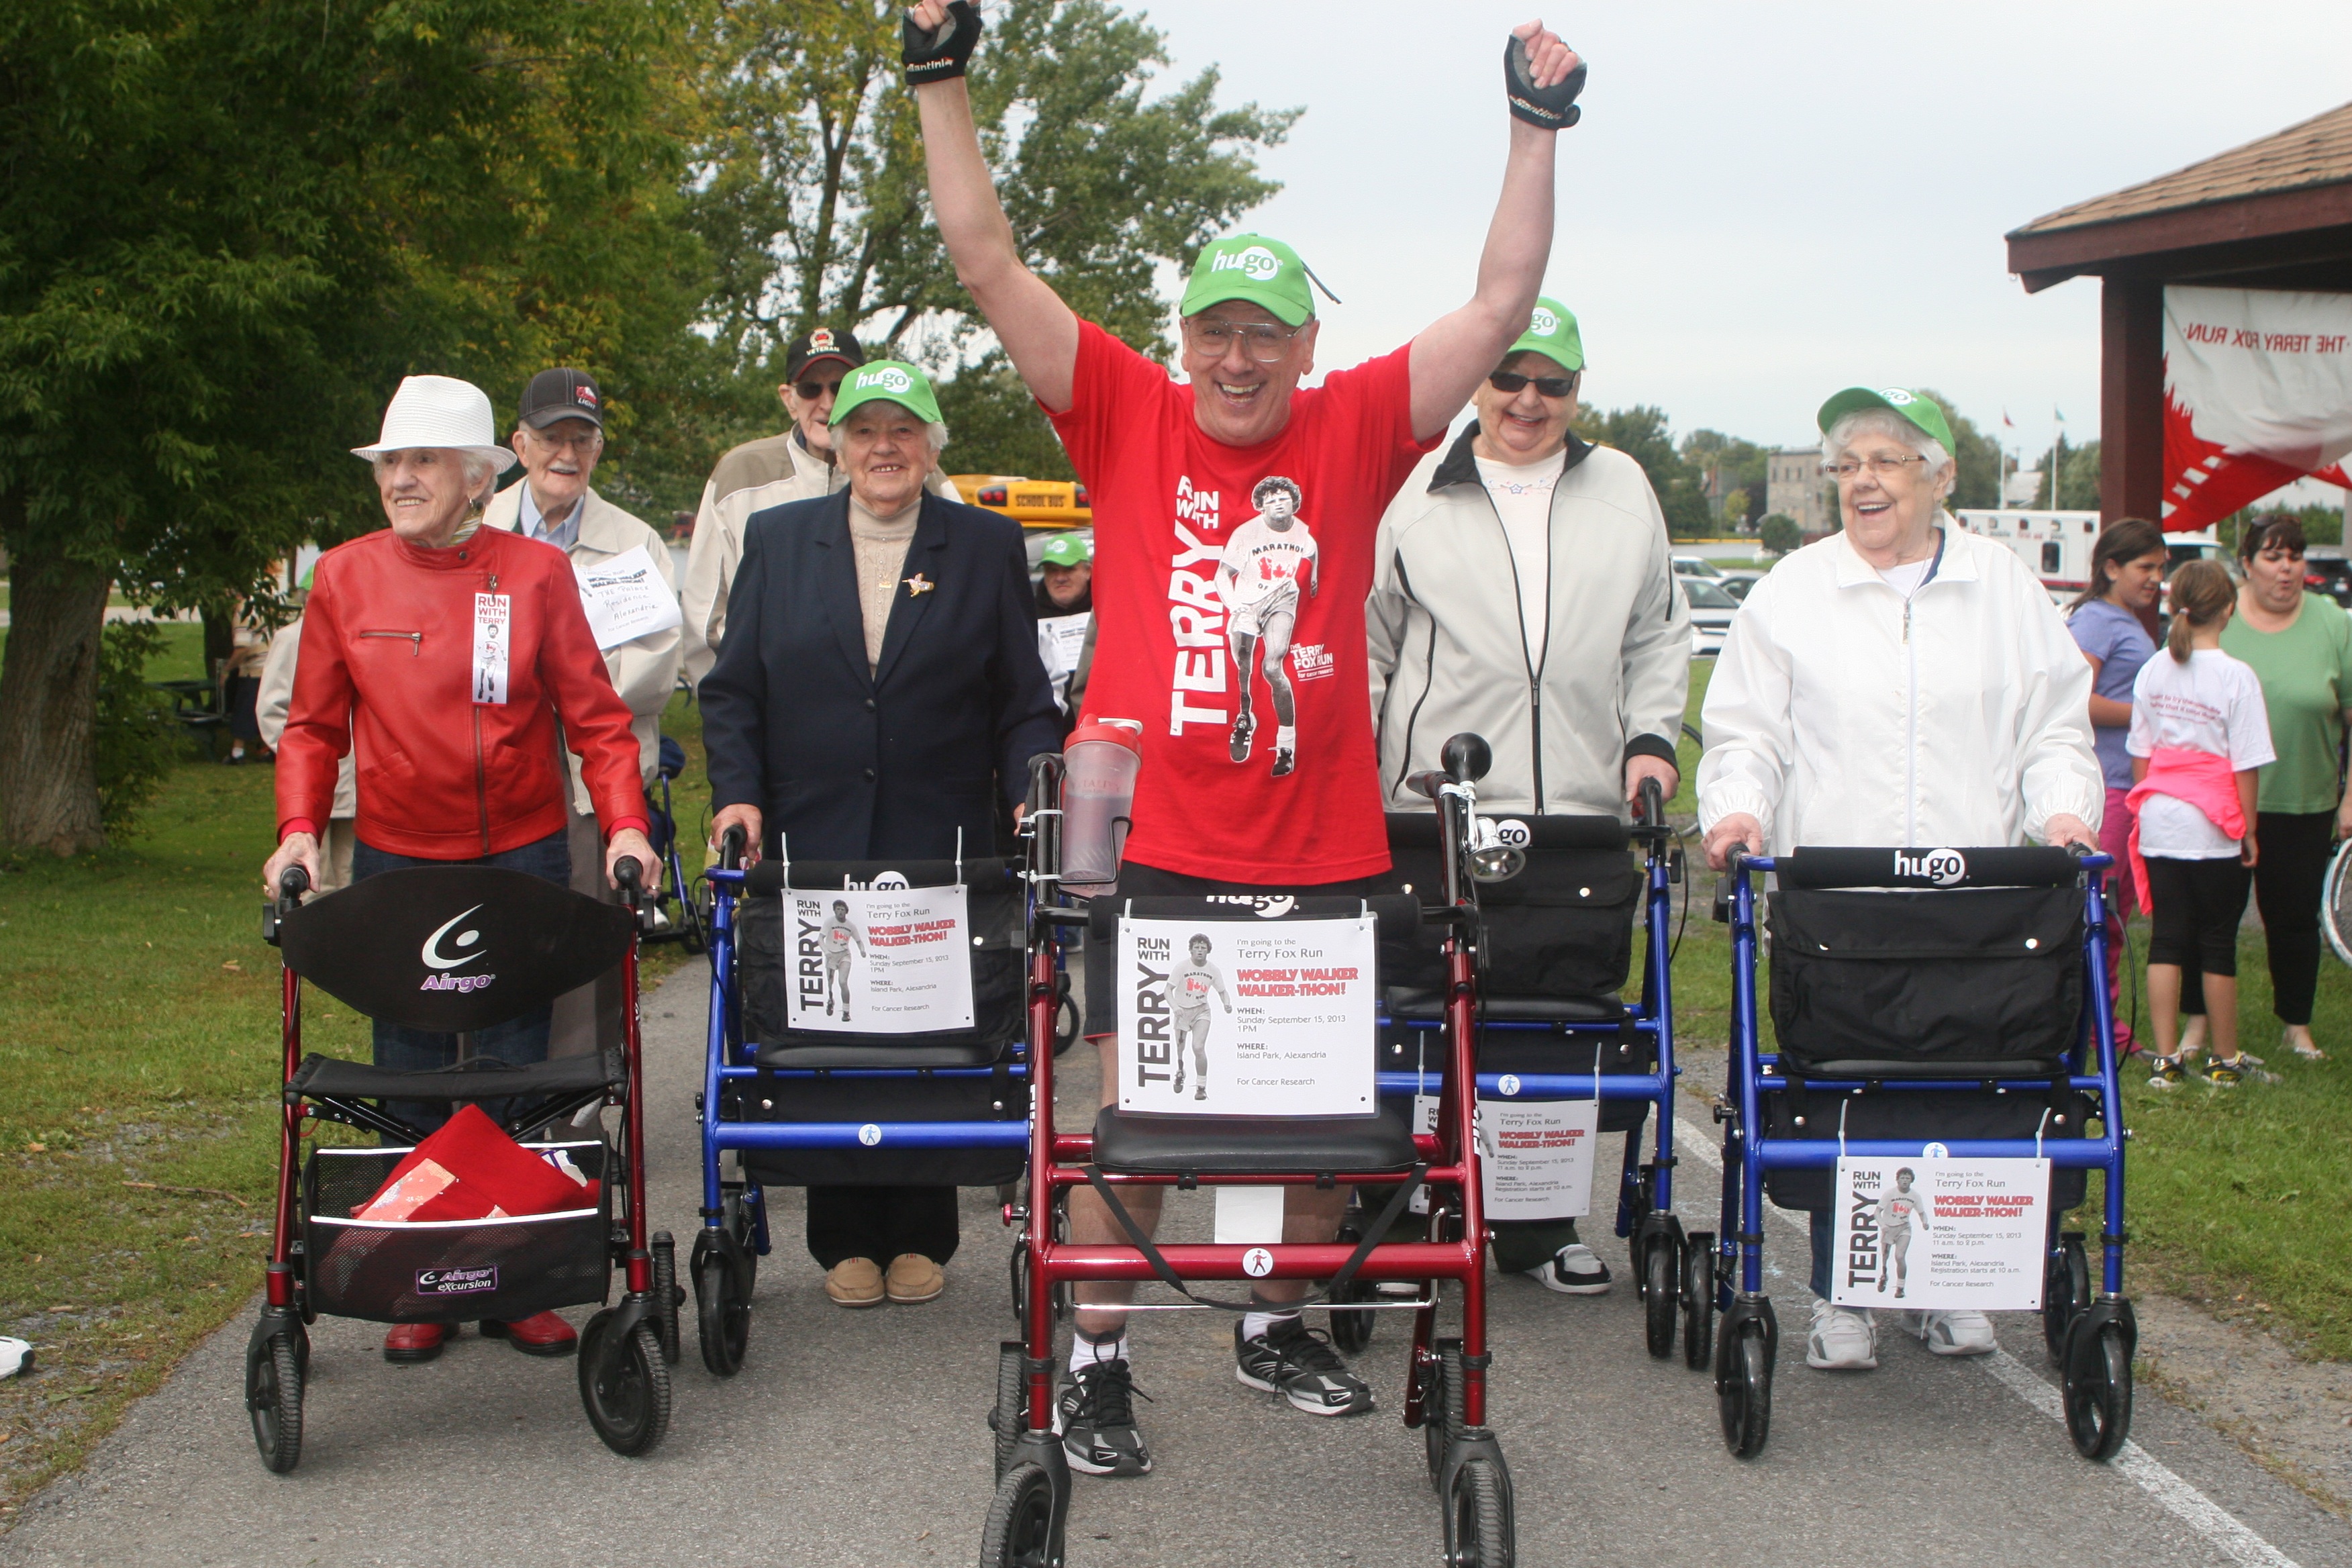 Bob Hardy adapts marathons to accommodate people who walk with rollators